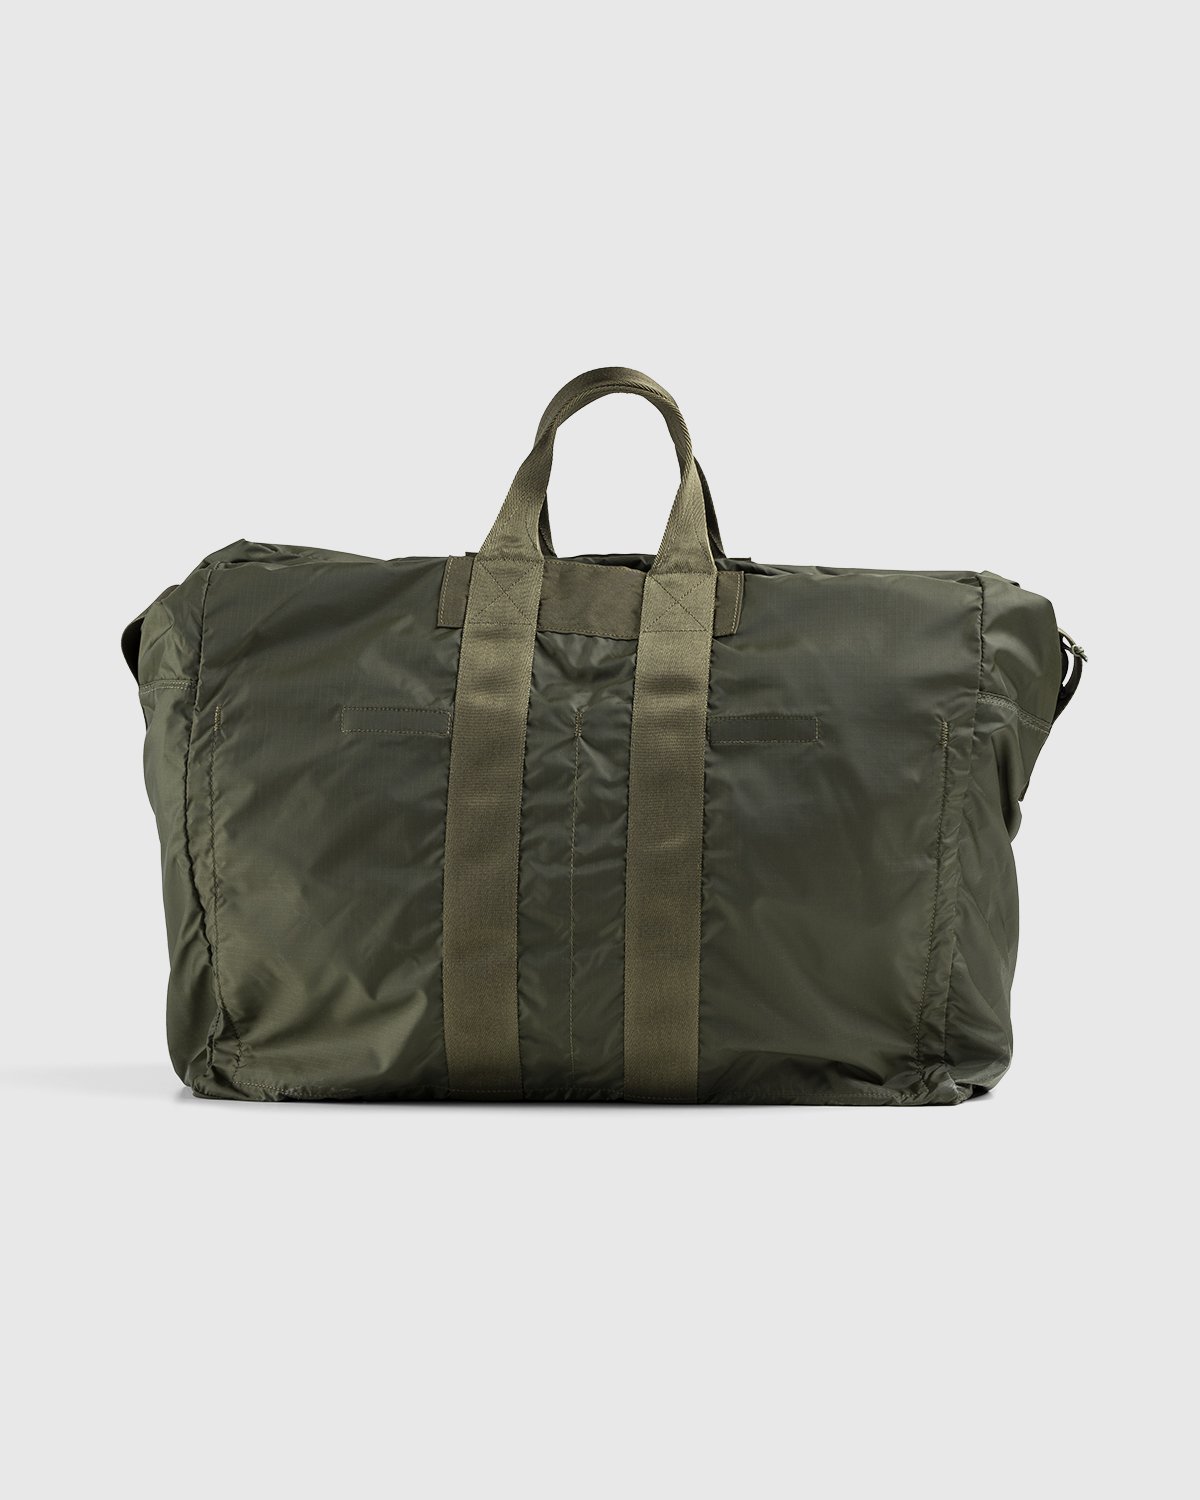 Porter-Yoshida & Co. - Flex 2-Way Duffle Bag Olive Drab - Accessories - Green - Image 2